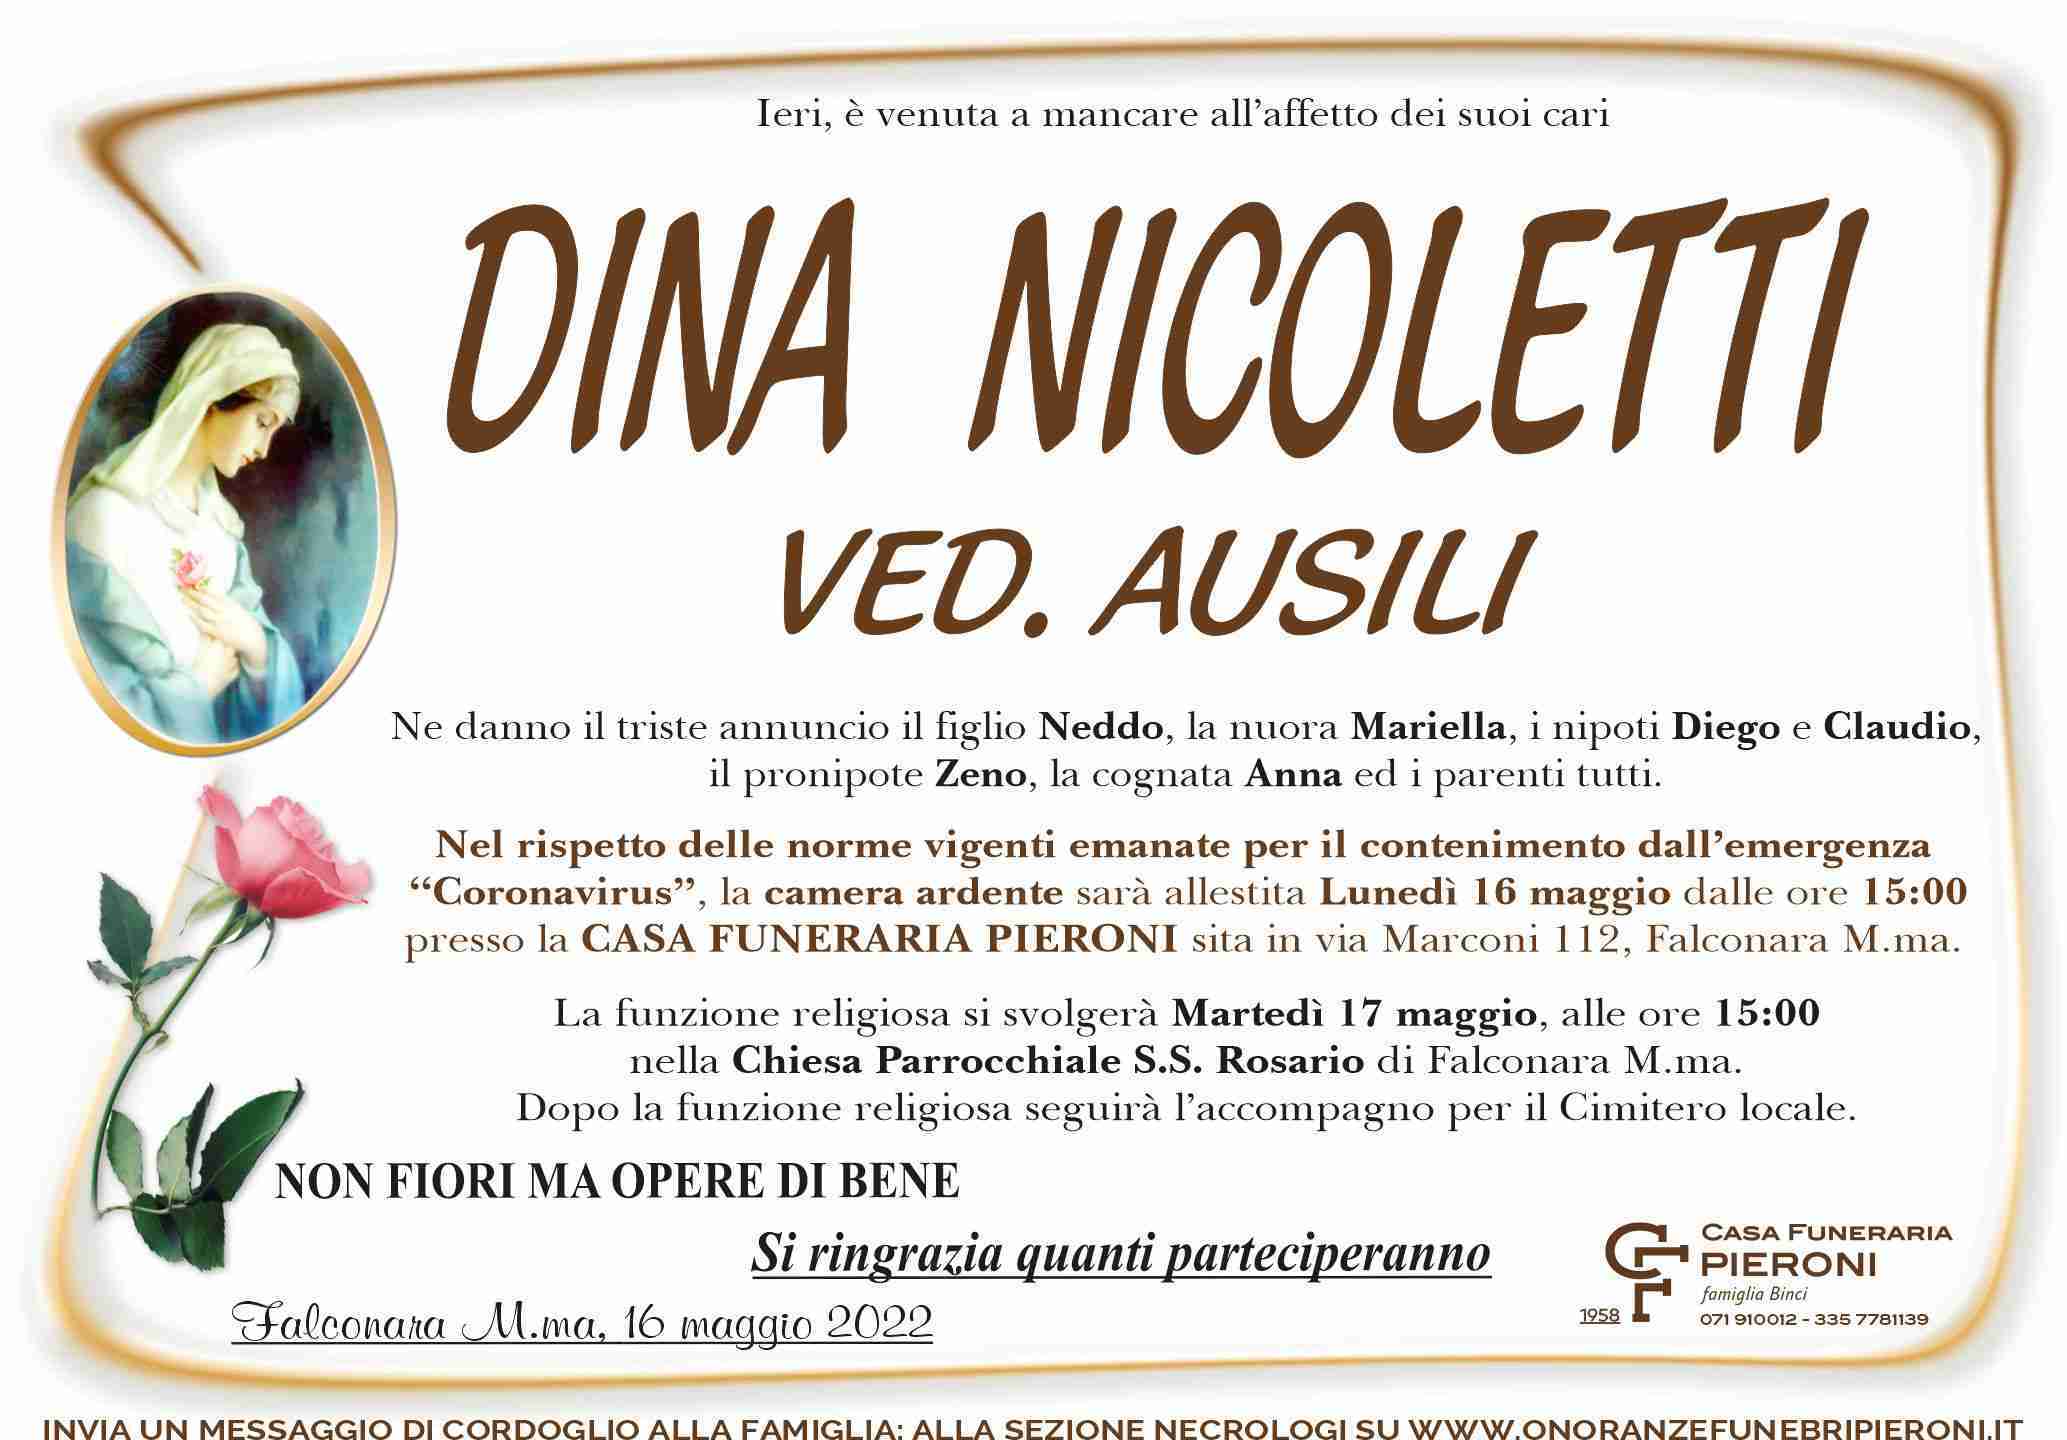 Dina Nicoletti